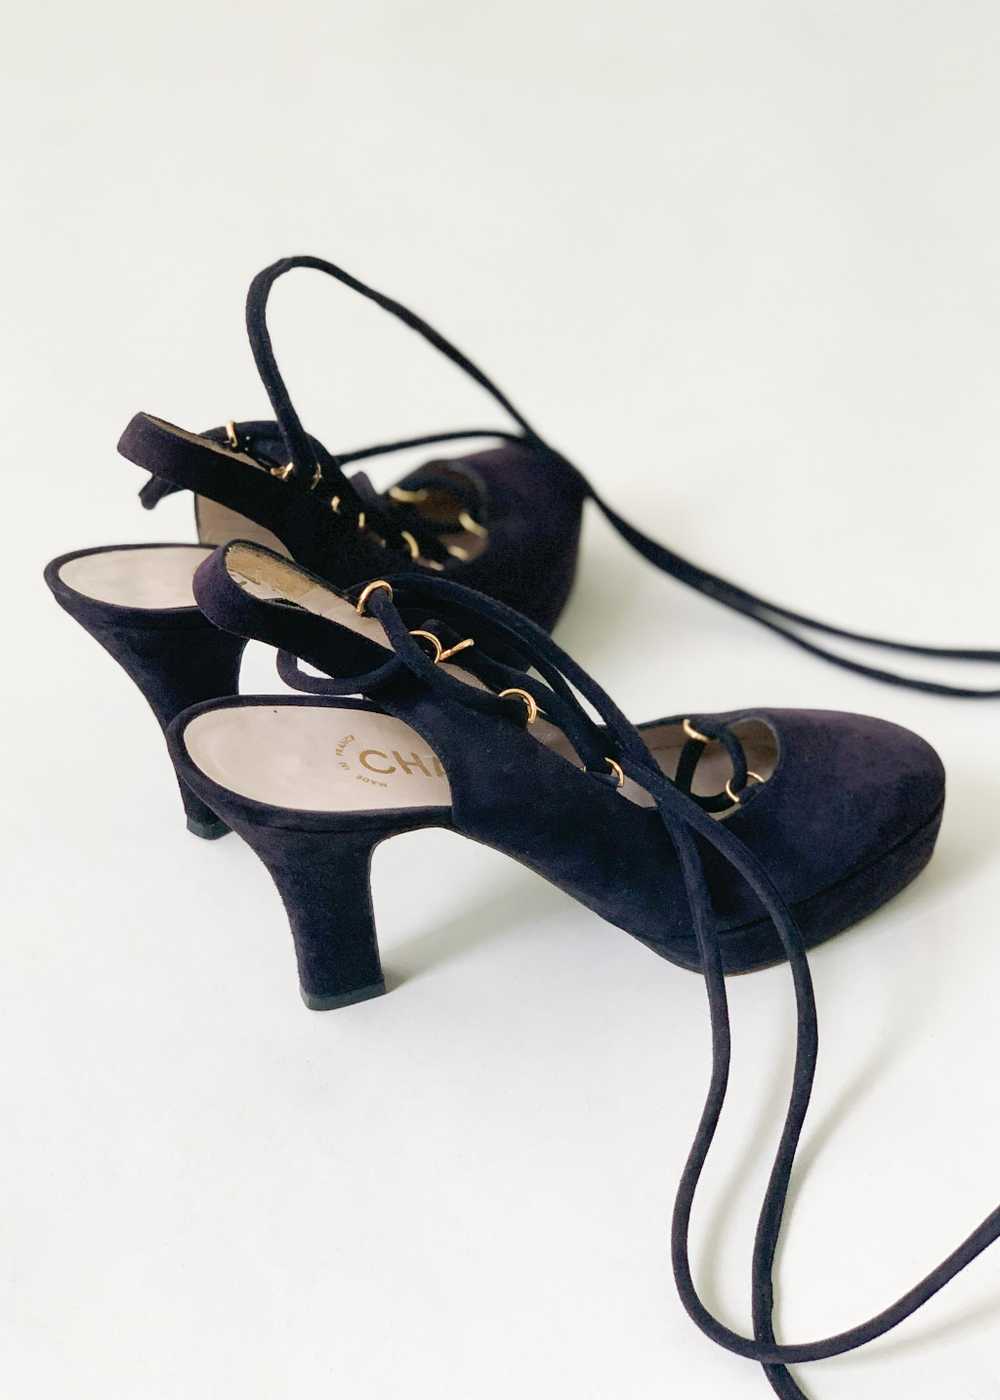 Vintage 1992 Chanel Lace Up Shoes - image 6